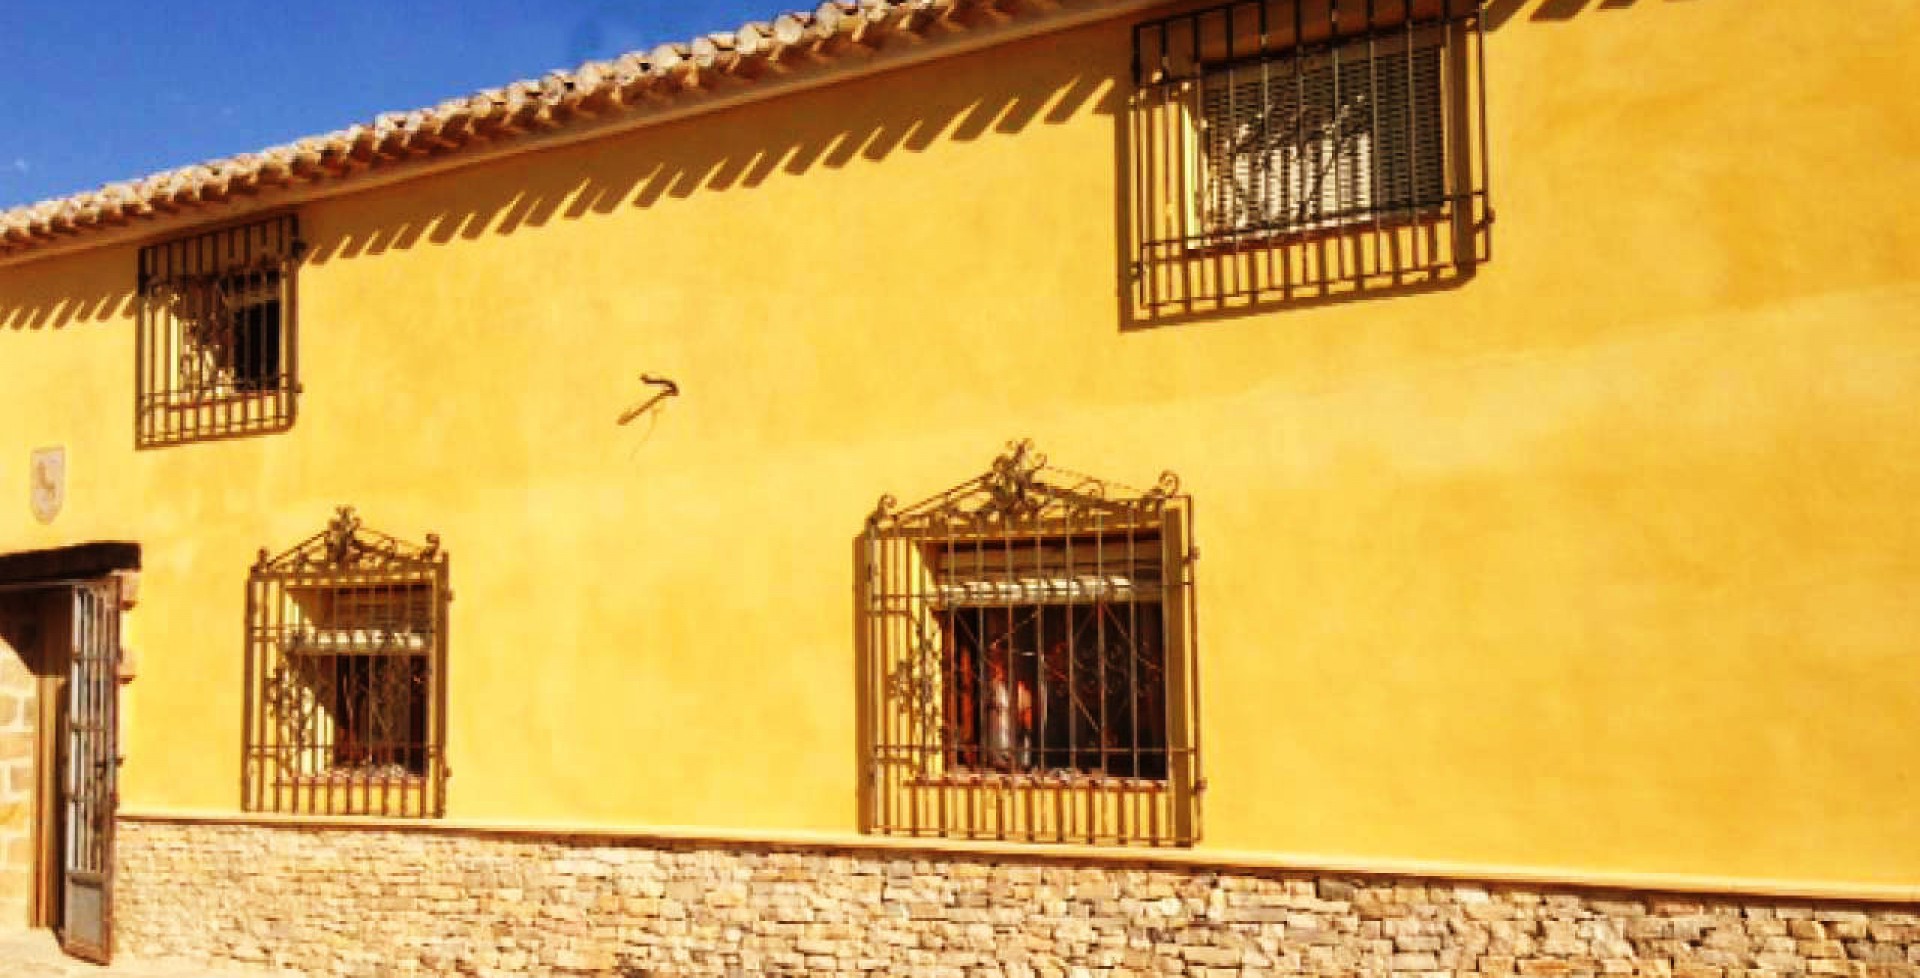 Impressive country house with nice views, Ricote, Murcia, Spain